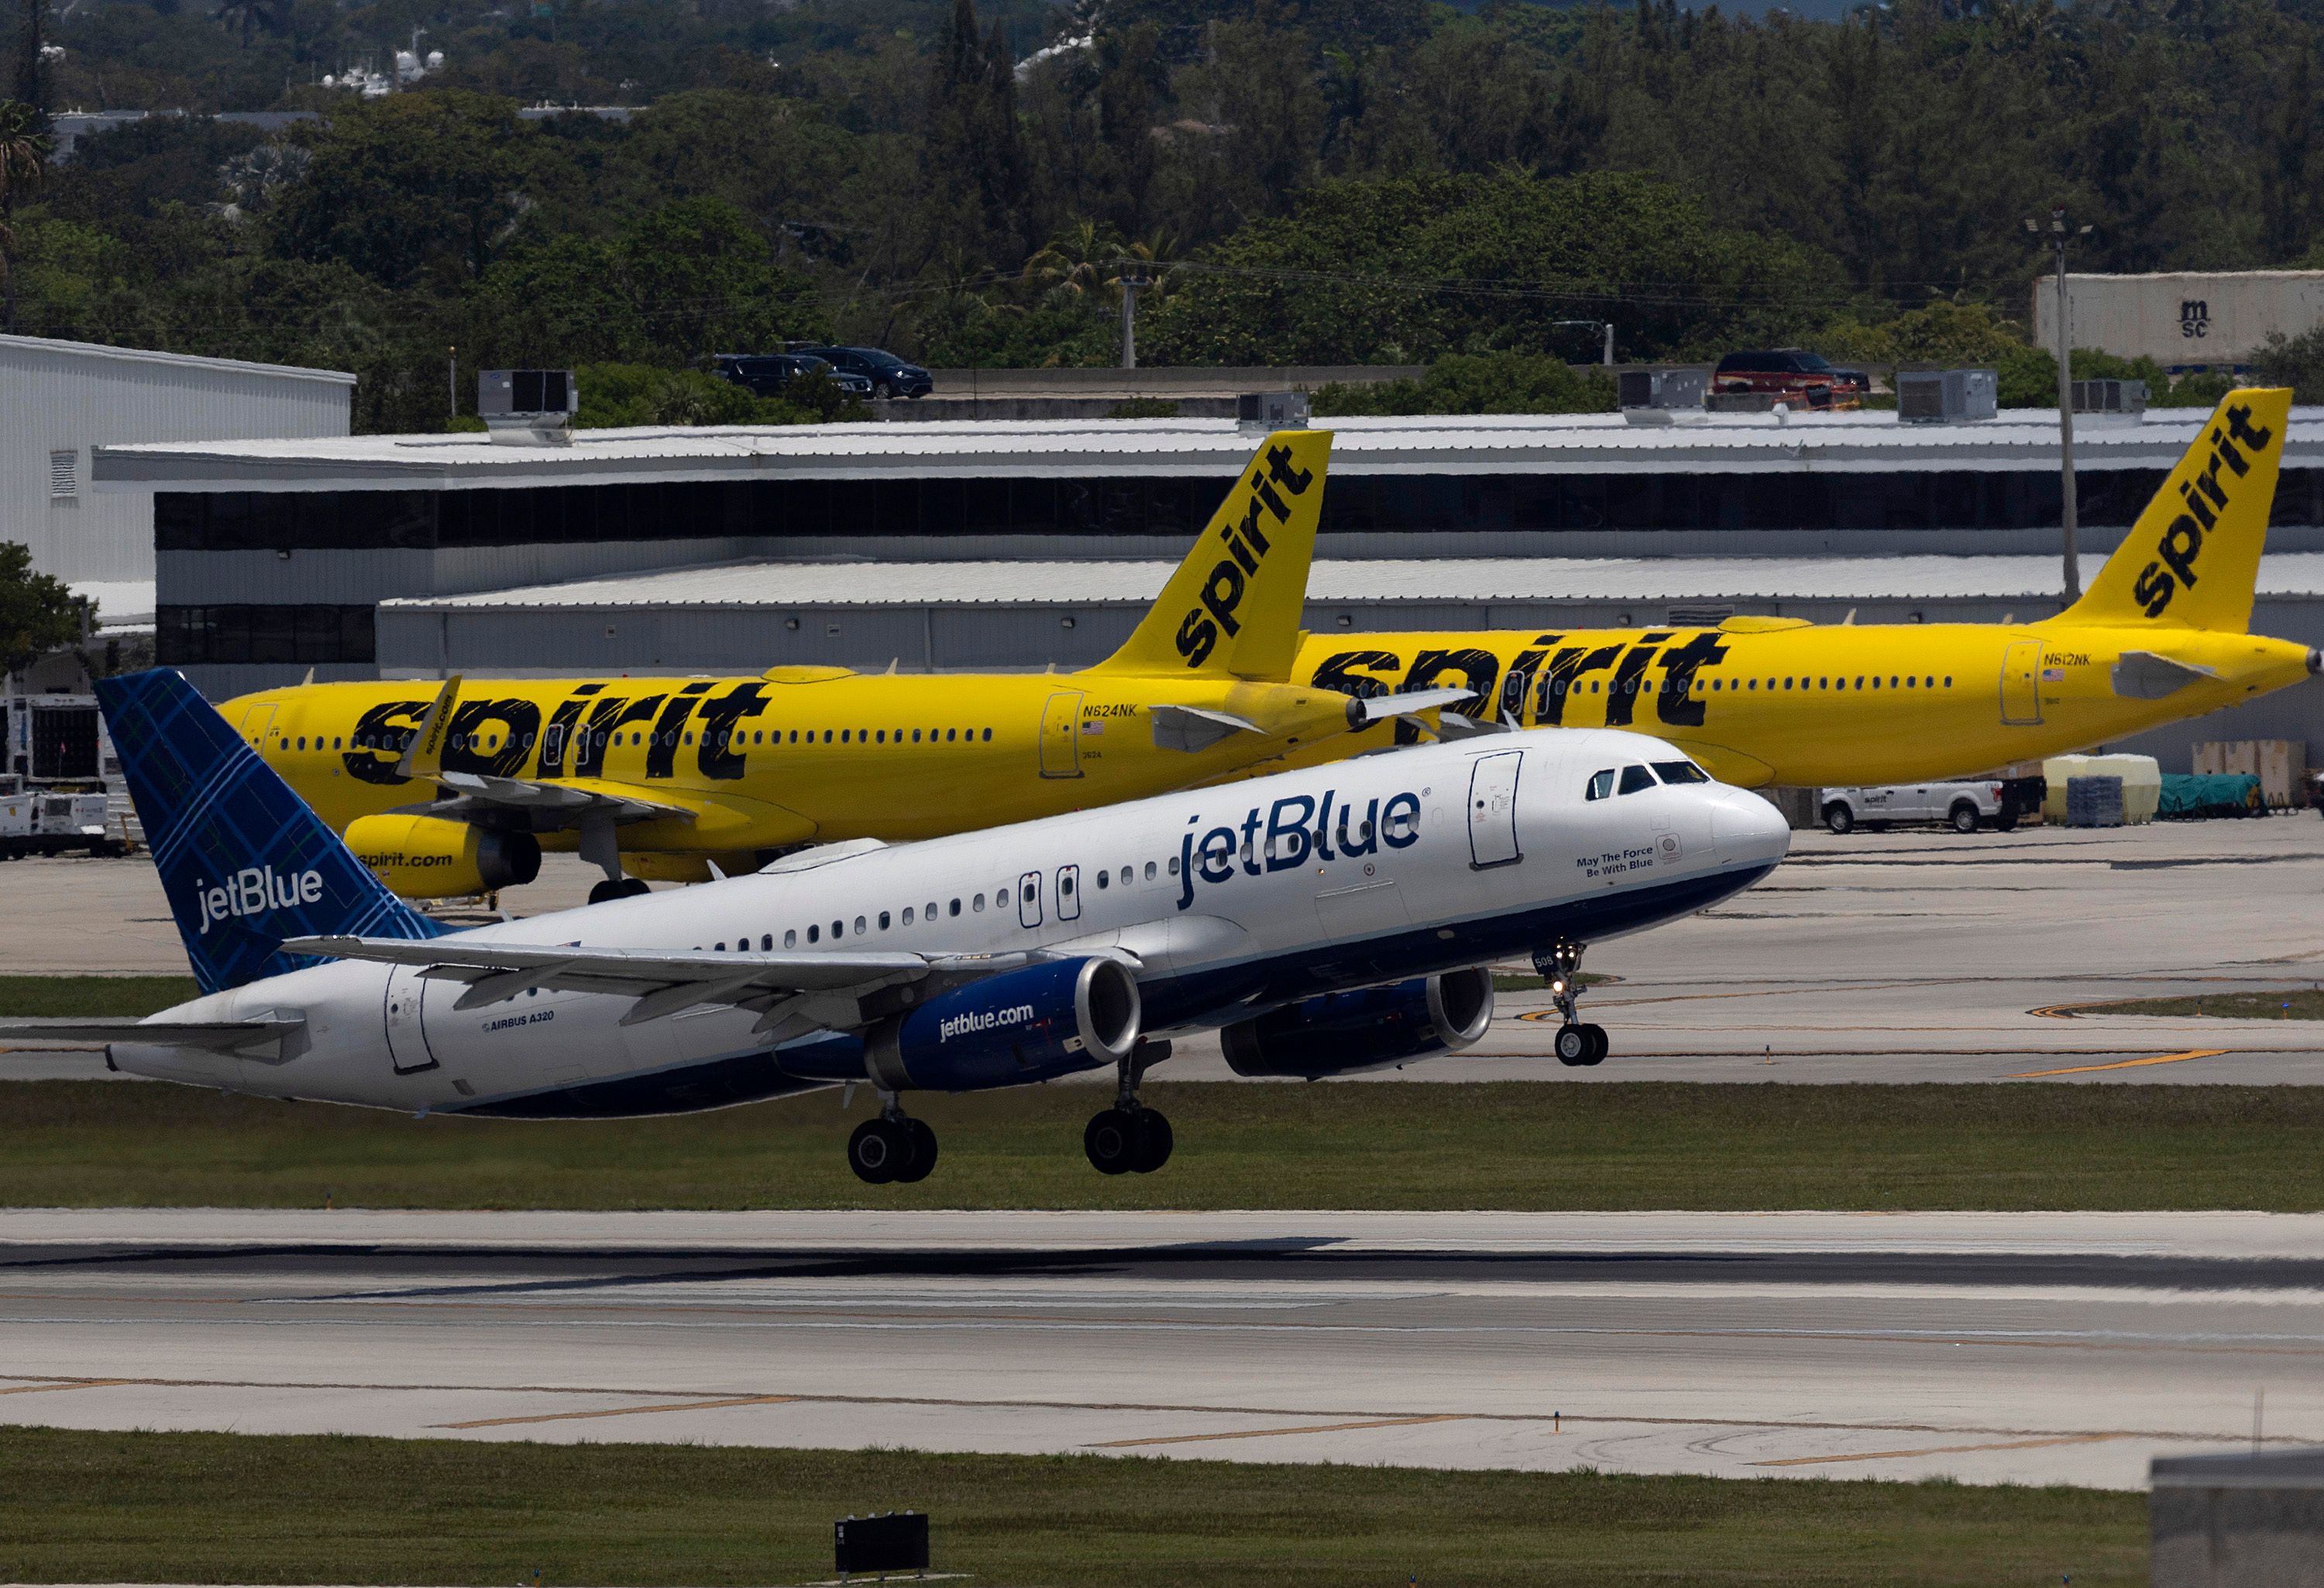 JetBlue-Spirit- Airlines-Aircraft-Getty-1397587501